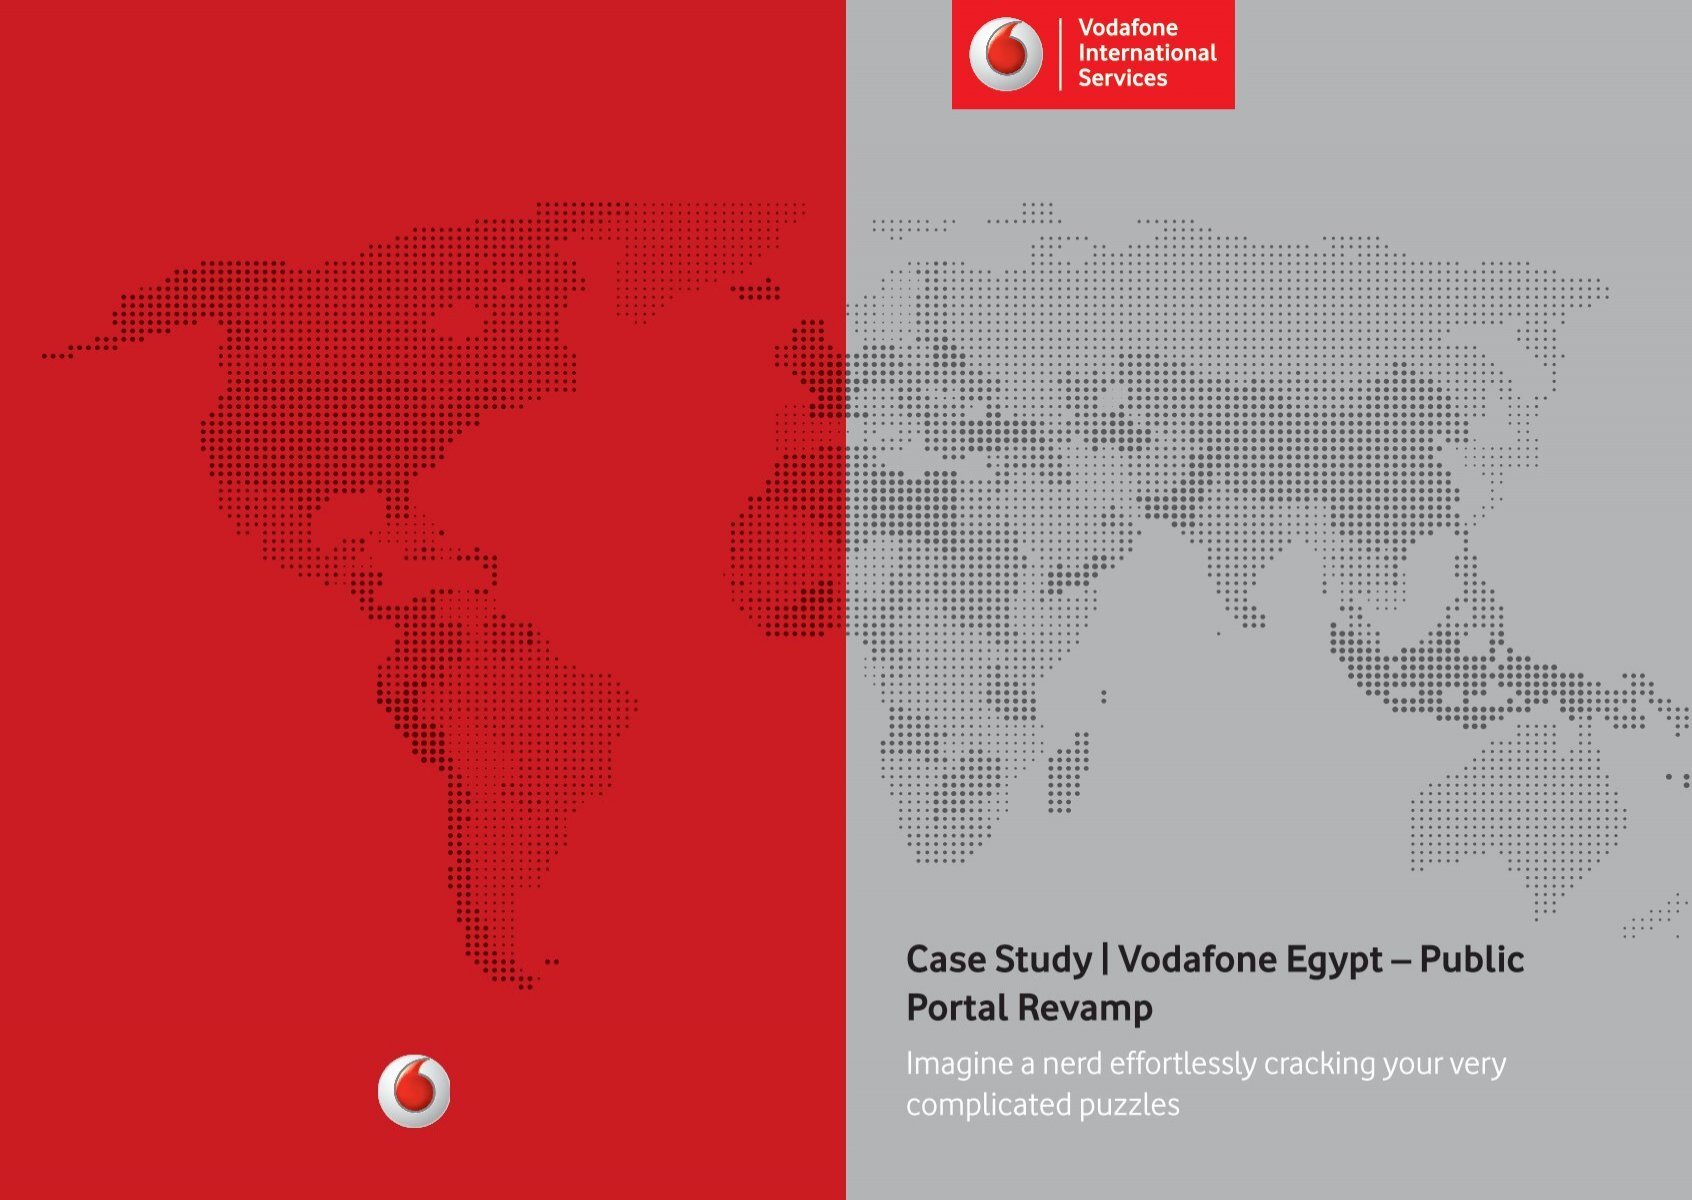 vodafone egypt case study